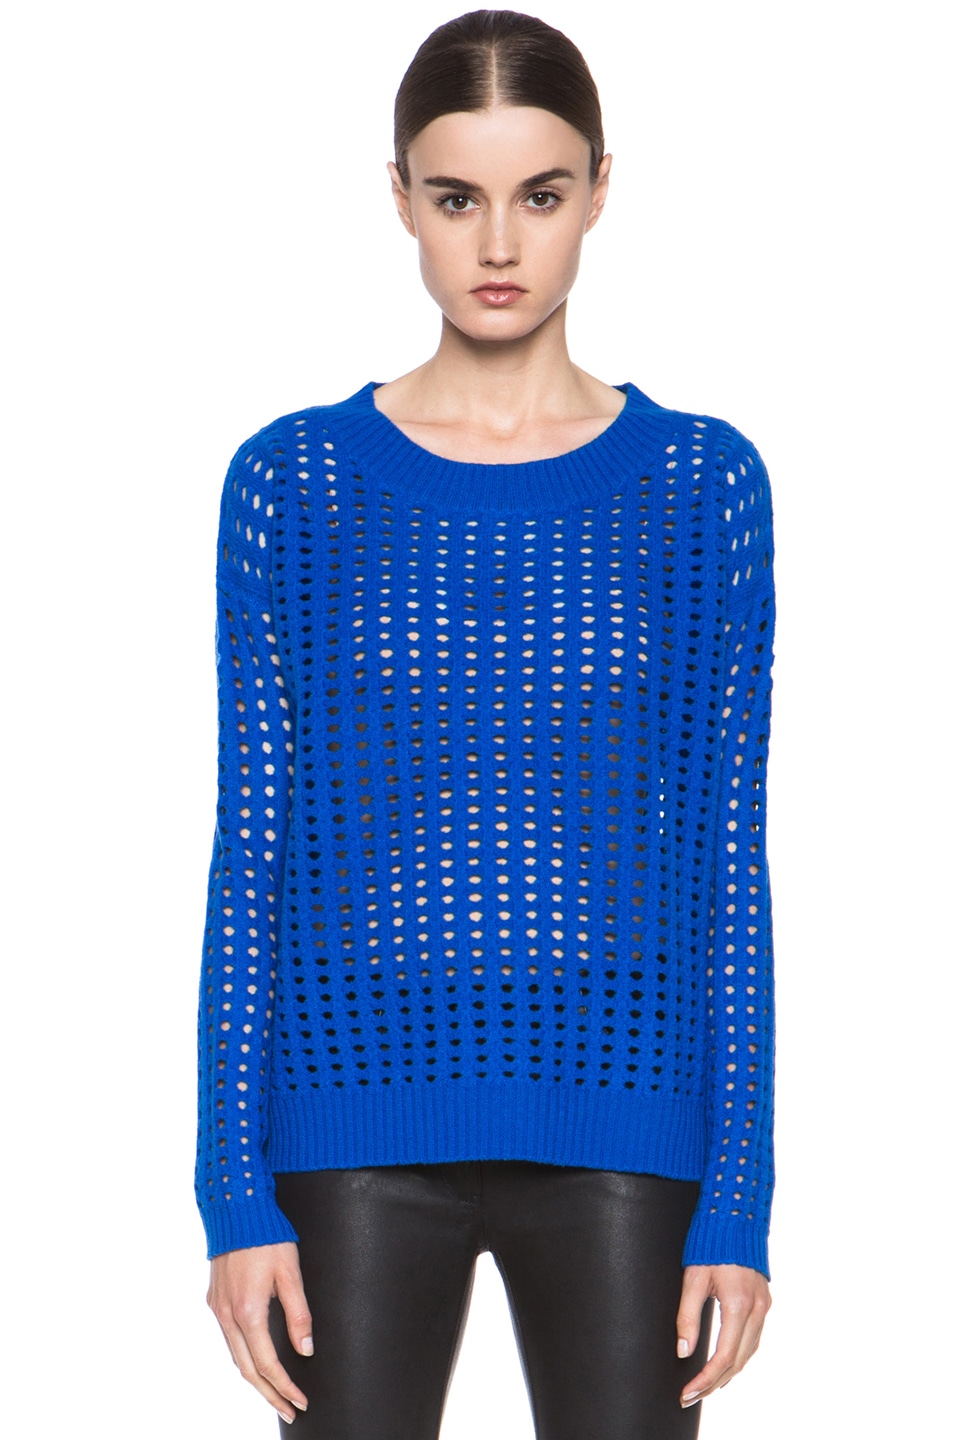 Tess Giberson Mesh Wool Sweater in Cobalt Blue | FWRD